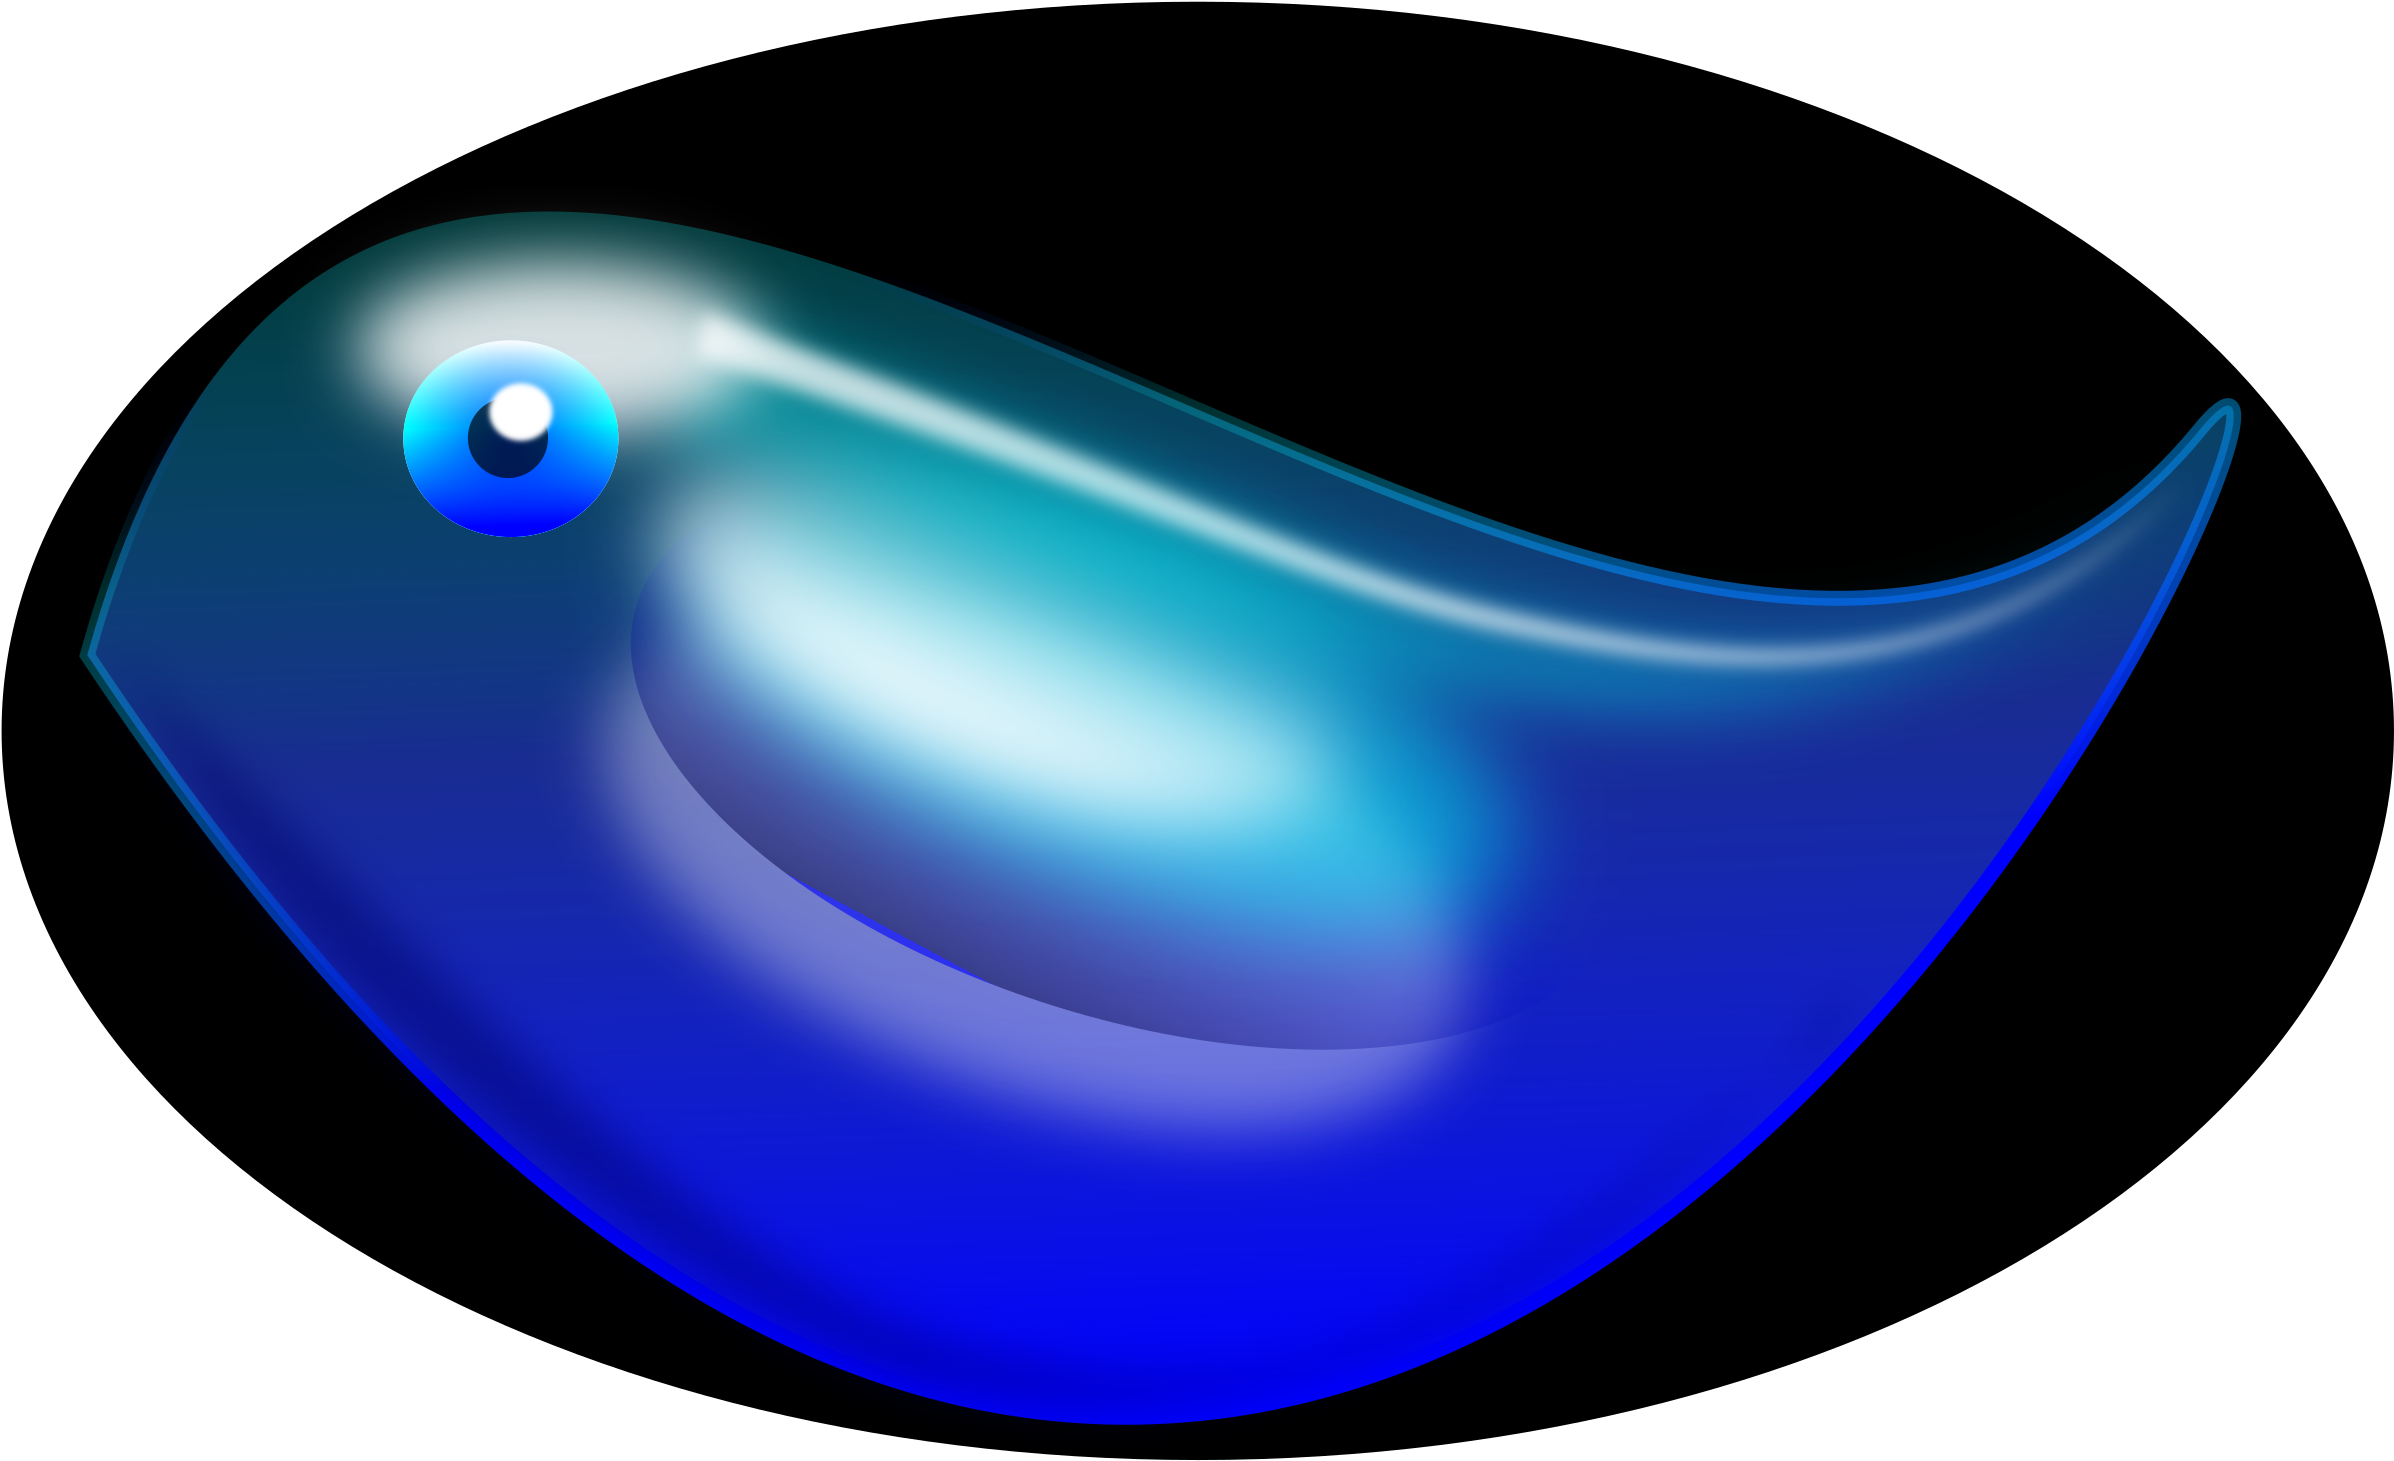 Big Image - Bluebird Of Happiness (2400x1473)